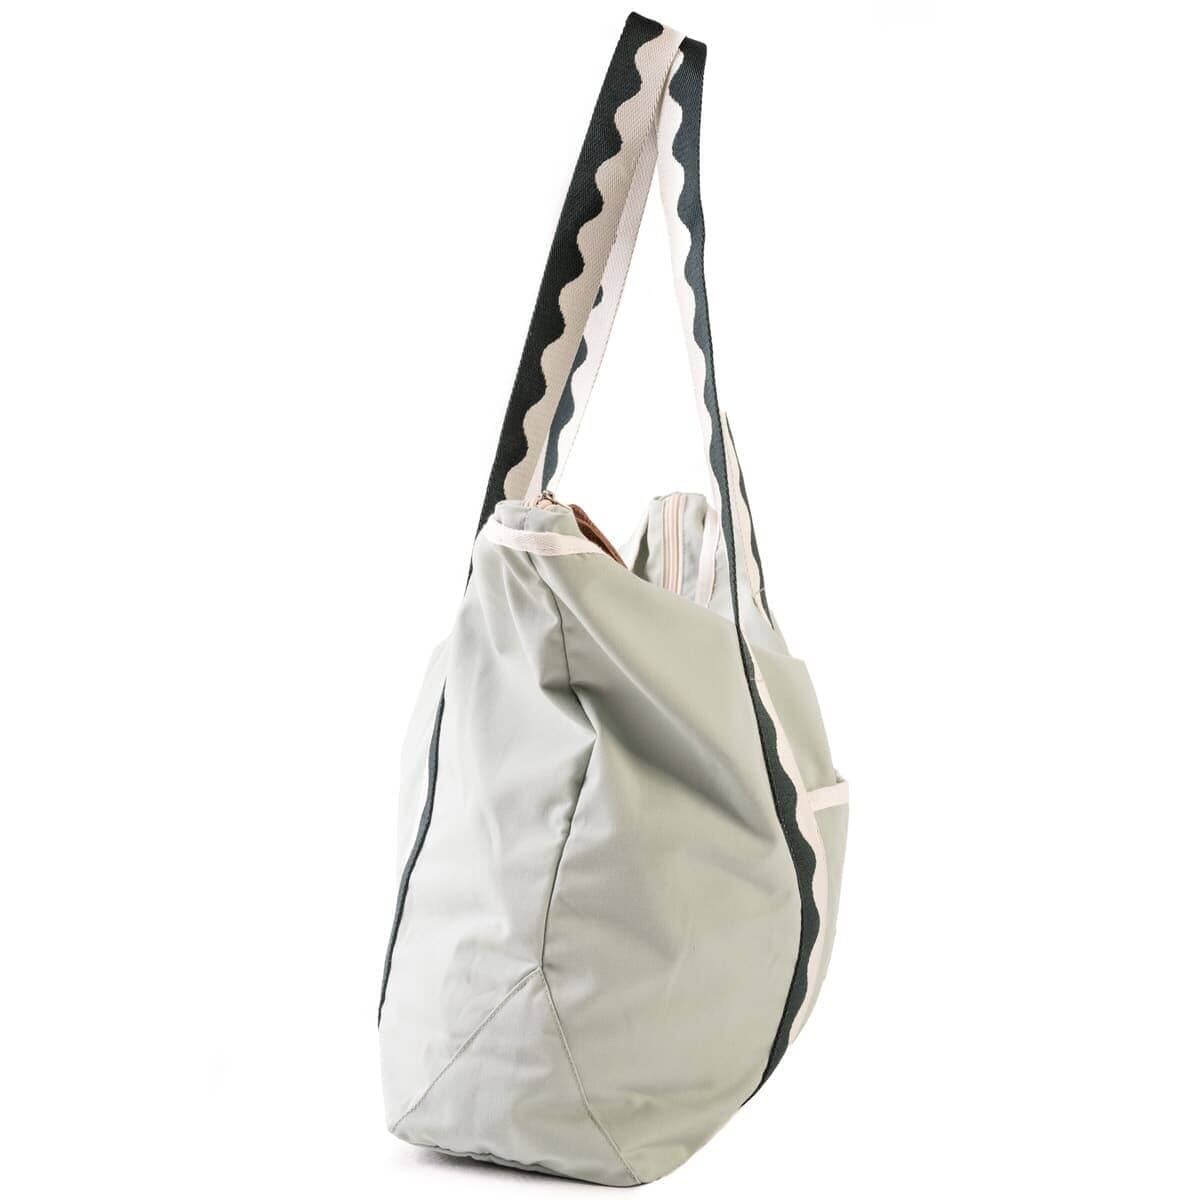 Studio image of riviera green beach bag